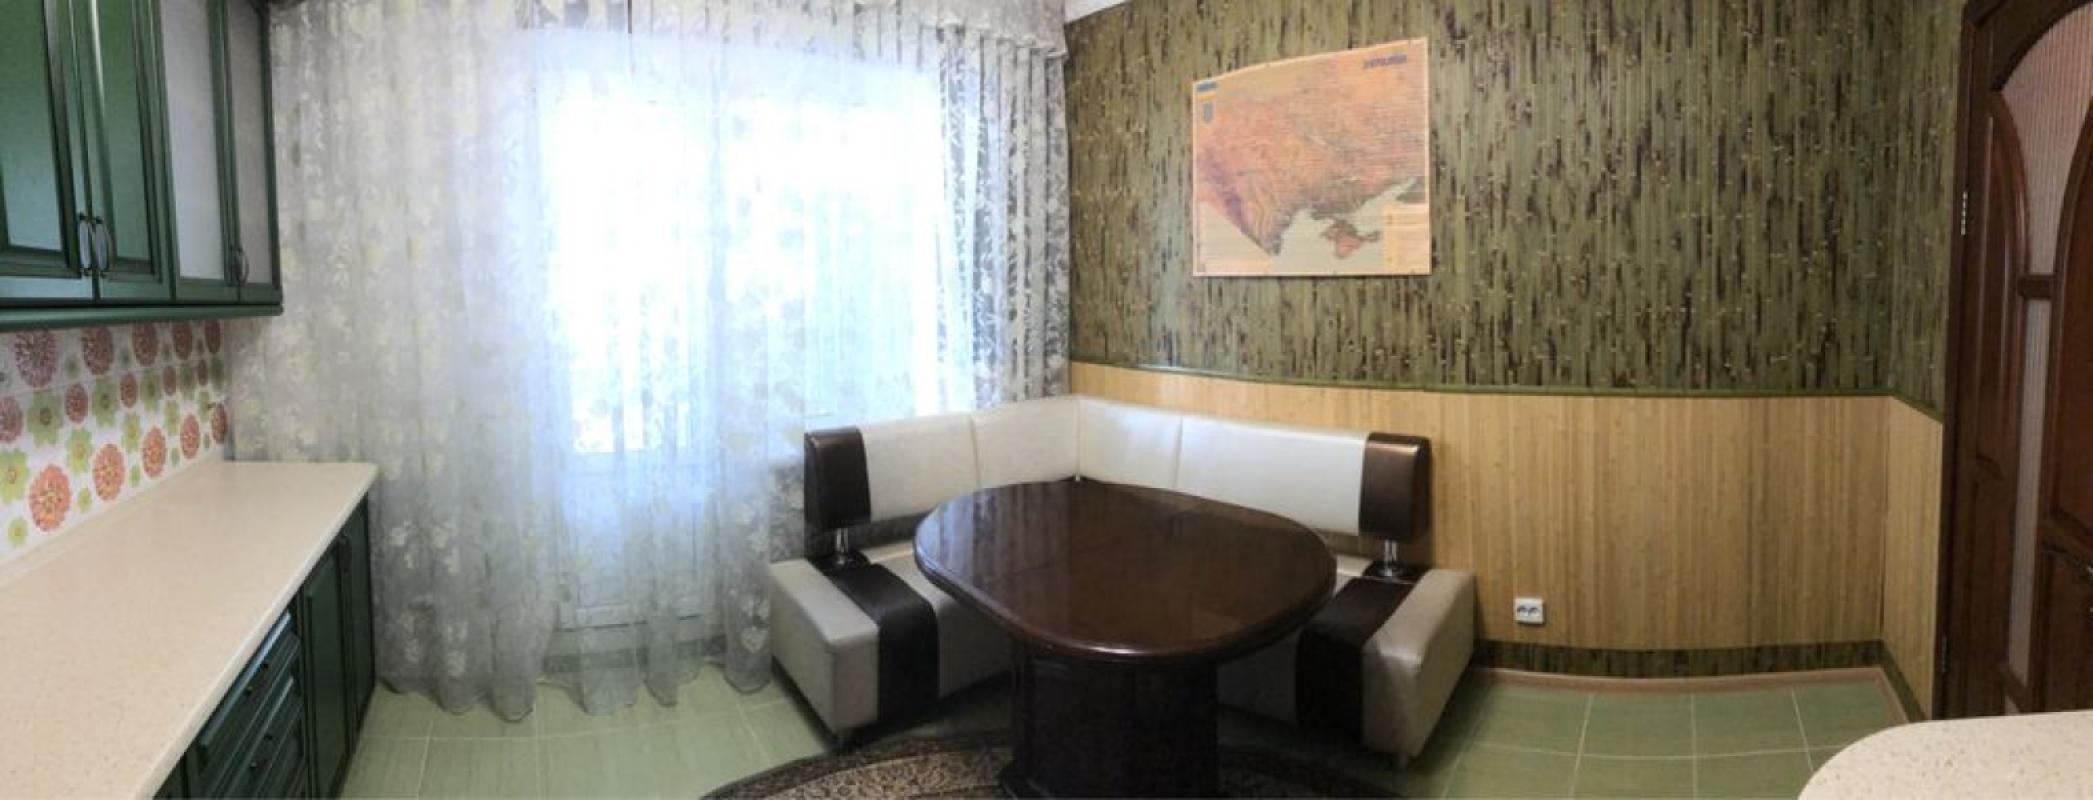 Долгосрочная аренда 3 комнатной квартиры Елены Пчилки ул. 2б